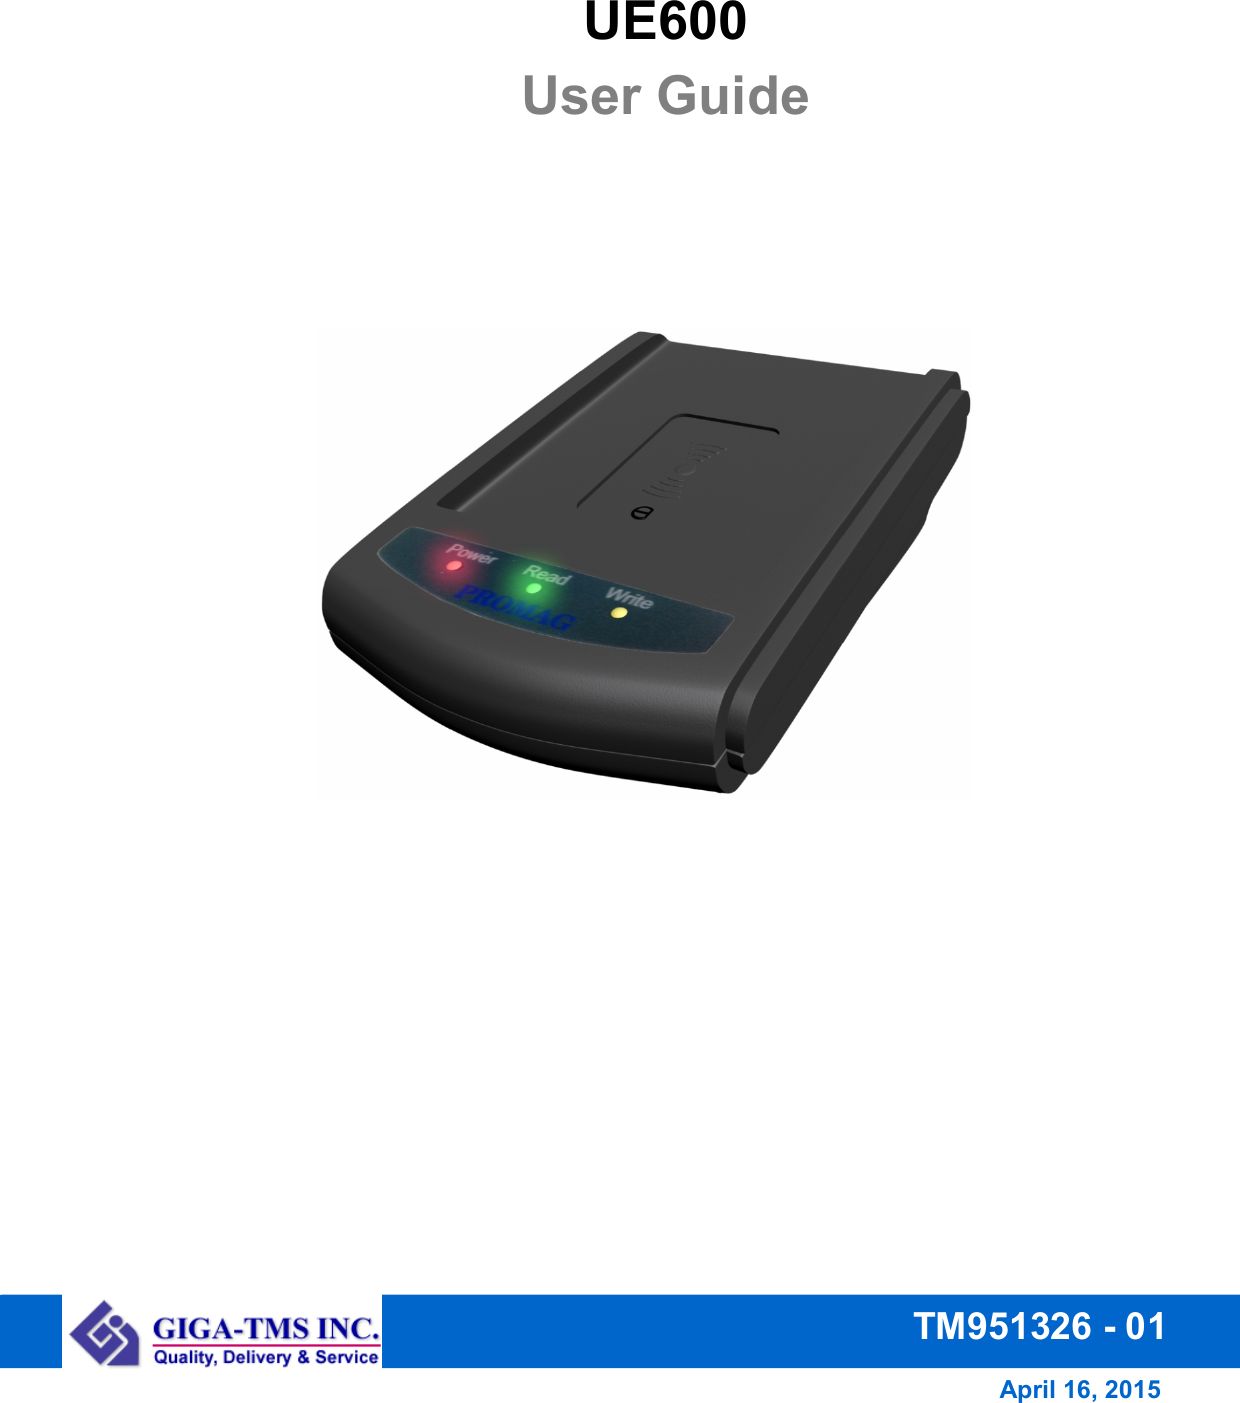                            UE600   User Guide  April 16, 2015 TM951326 - 01 